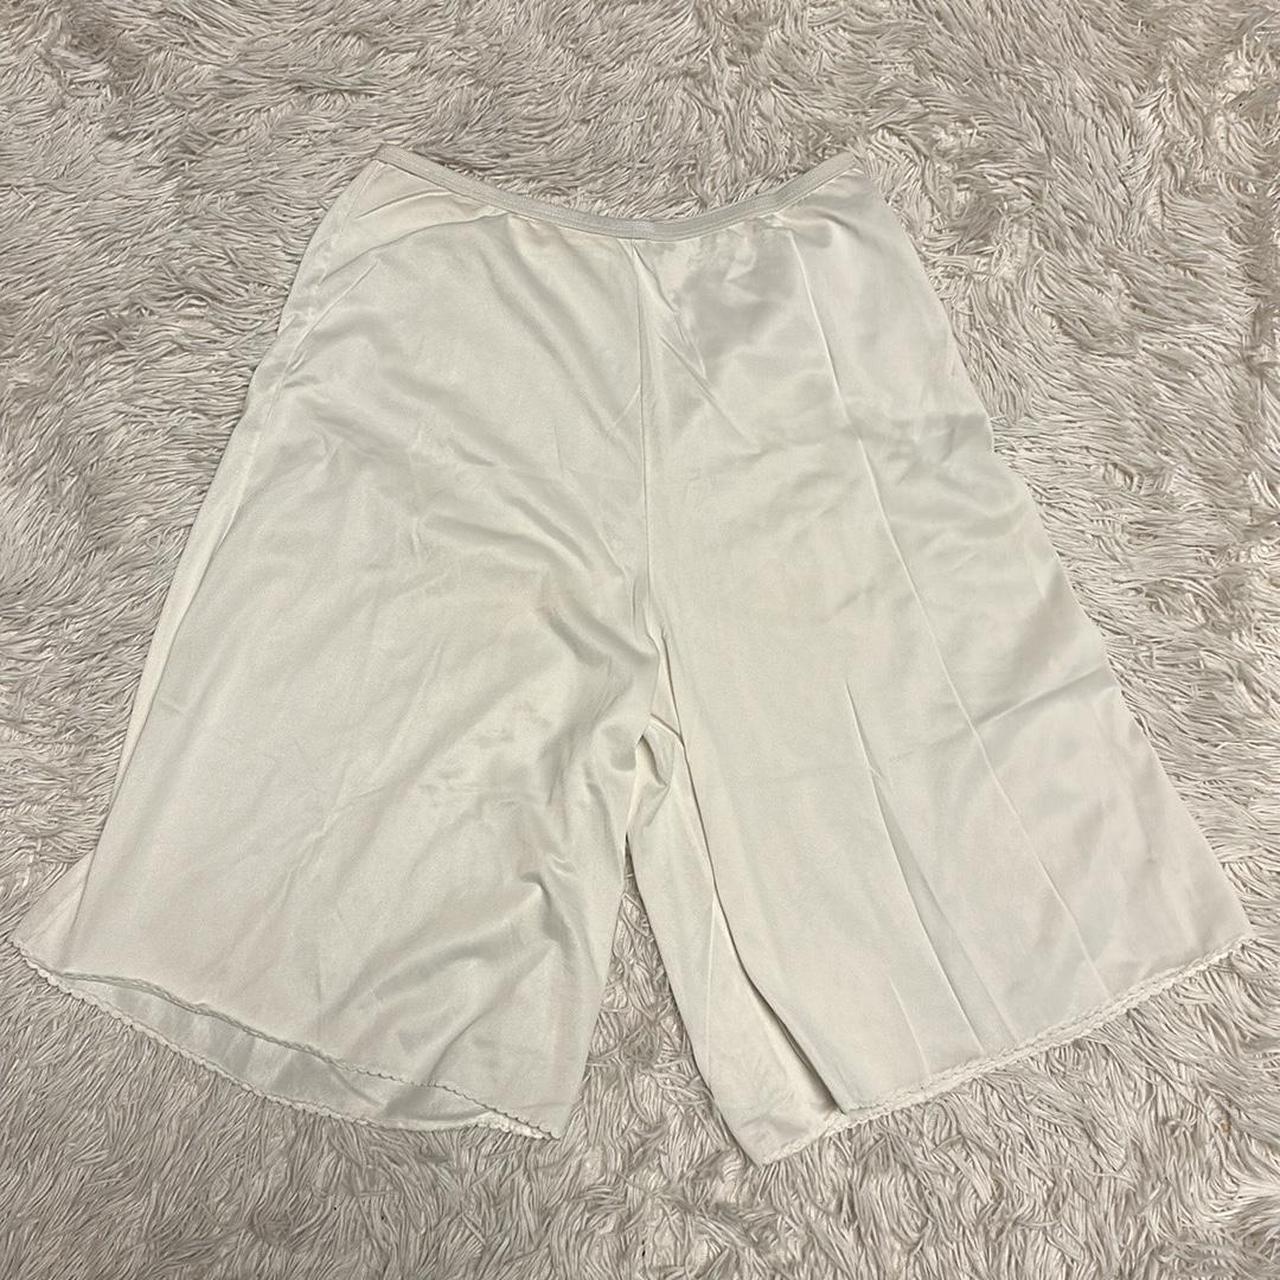 Vintage 70’s Wondermaids Slip shorts, Size small, 100%